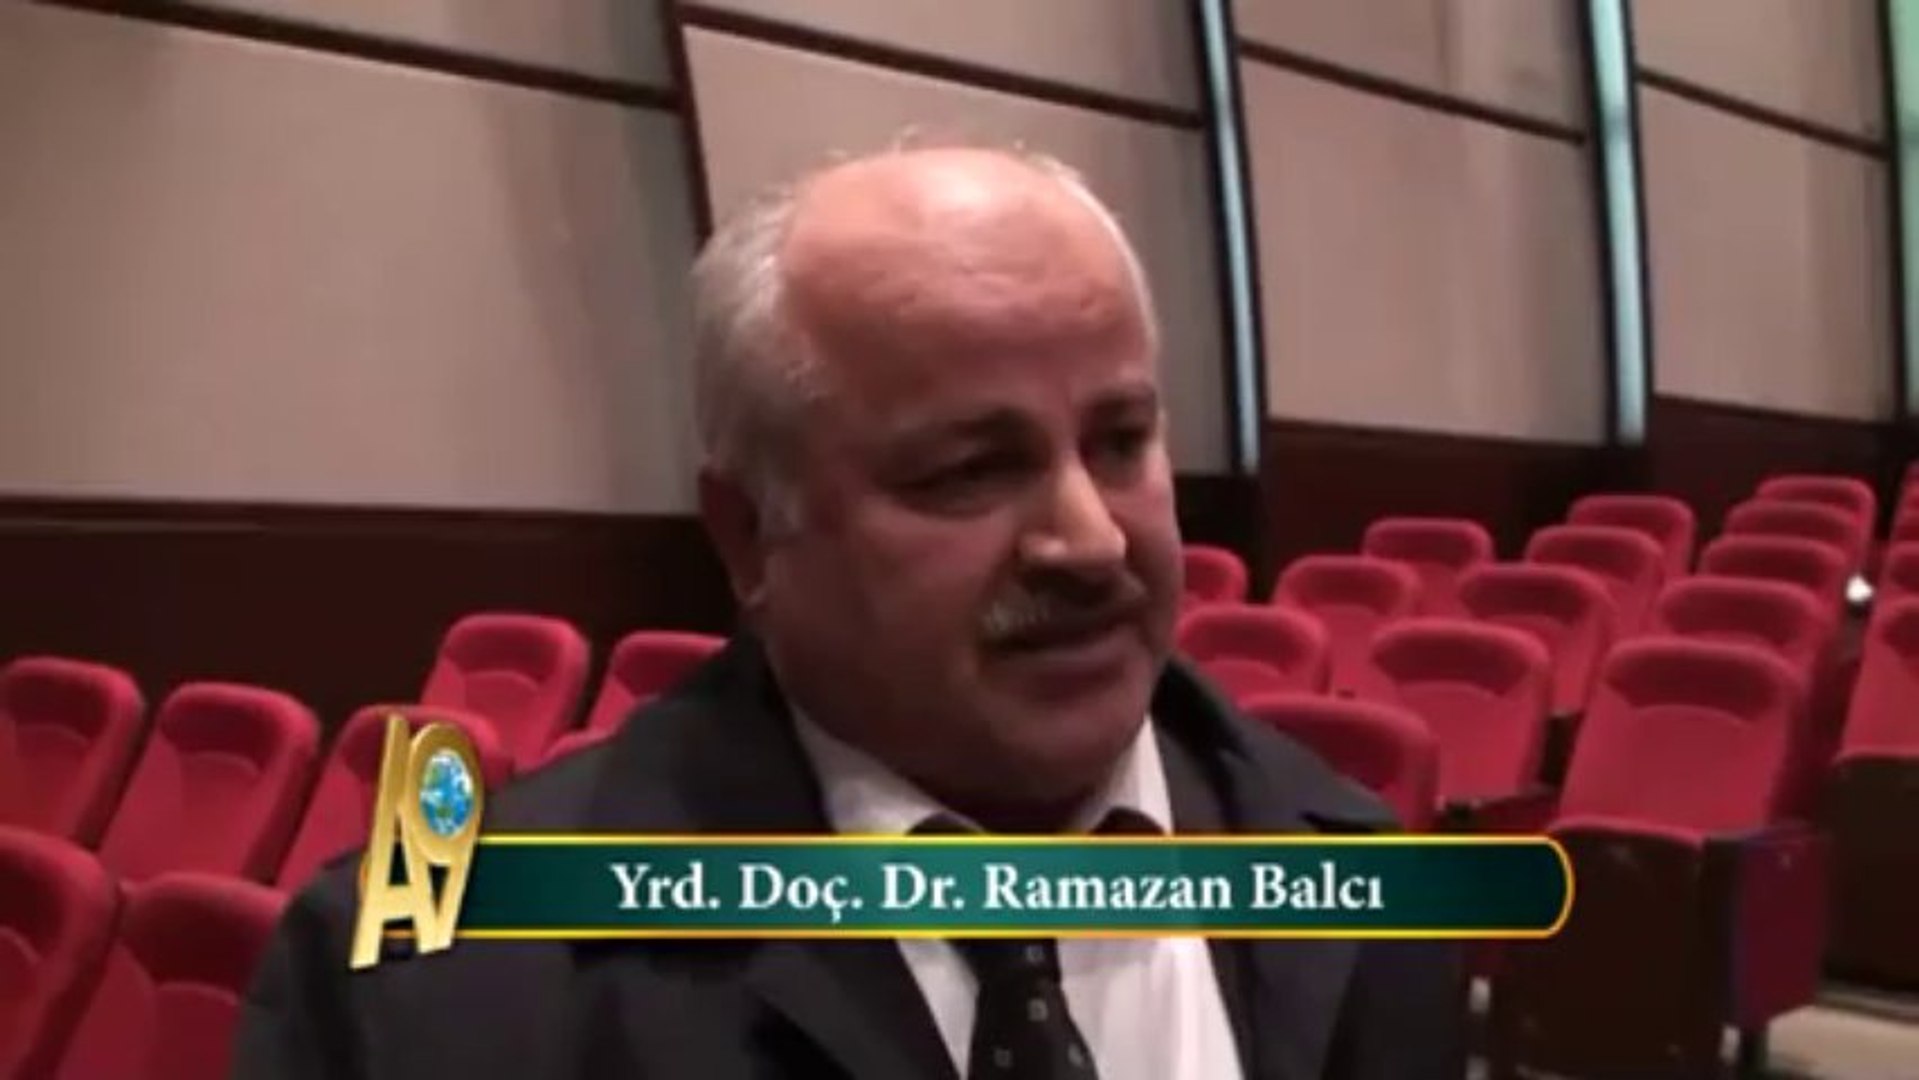 Yard. Doç. Dr. Ramazan Balcı - Dailymotion Video